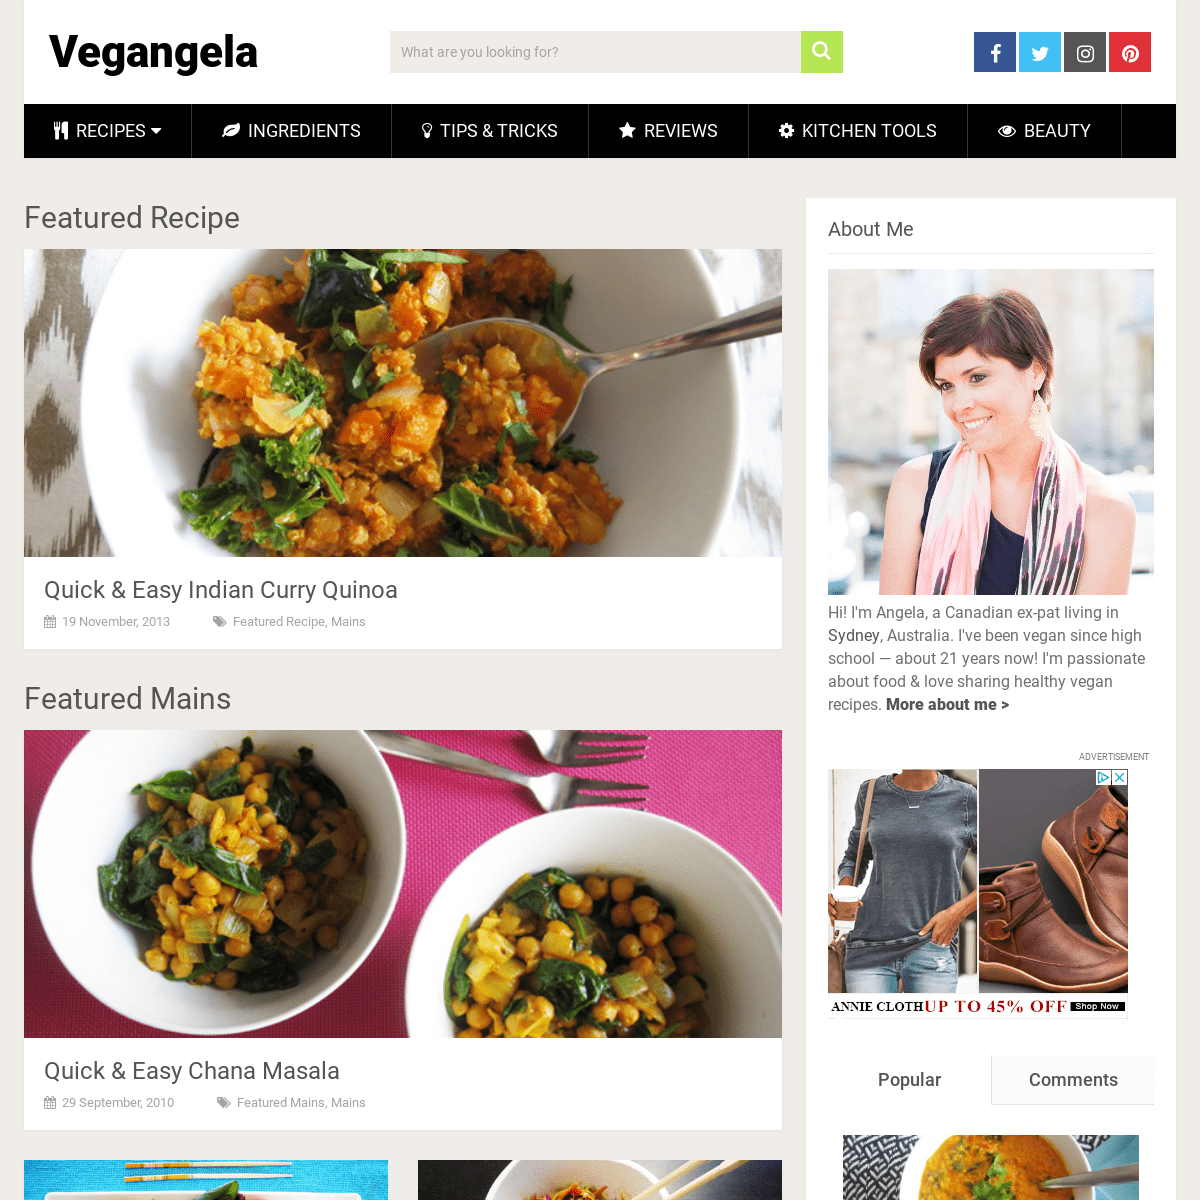 Vegan Recipes - Quick, Easy & Healthy! - Vegangela